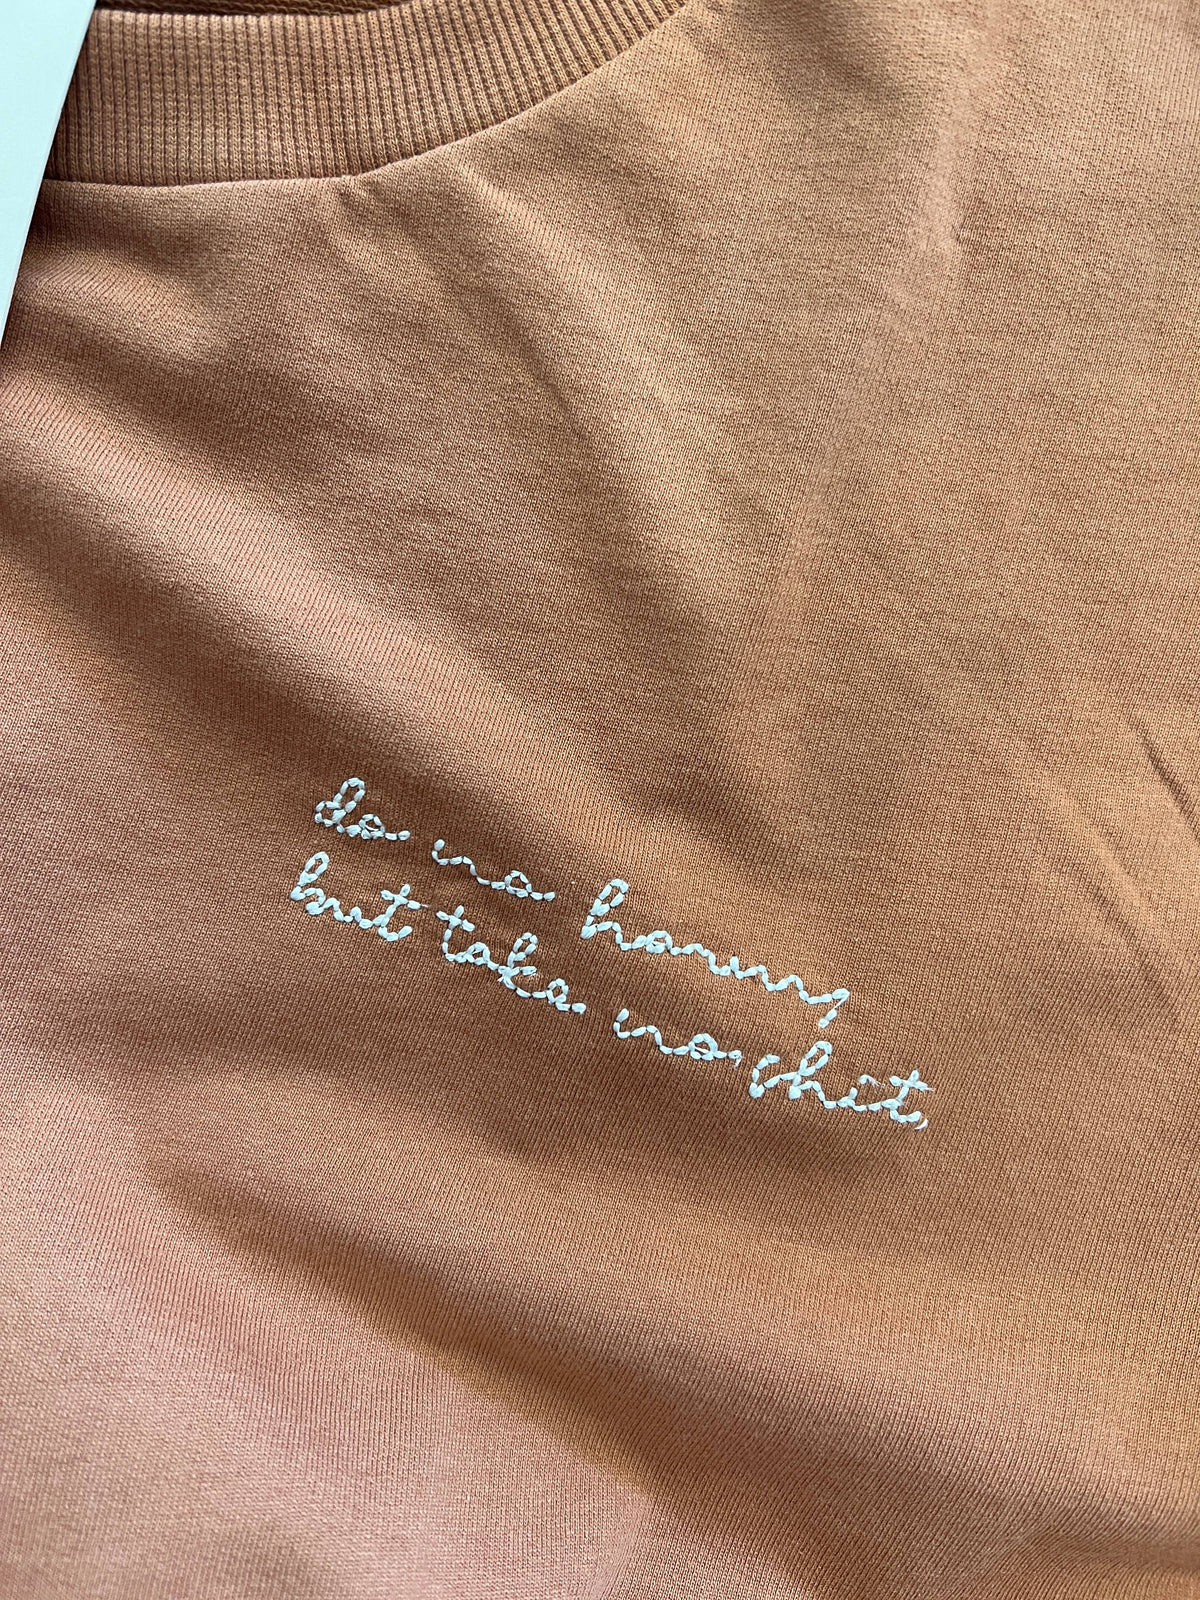 'Do No Harm, But Take No Shit' Chainstitch Sweatshirt-Polished Prints-Crying Out Loud